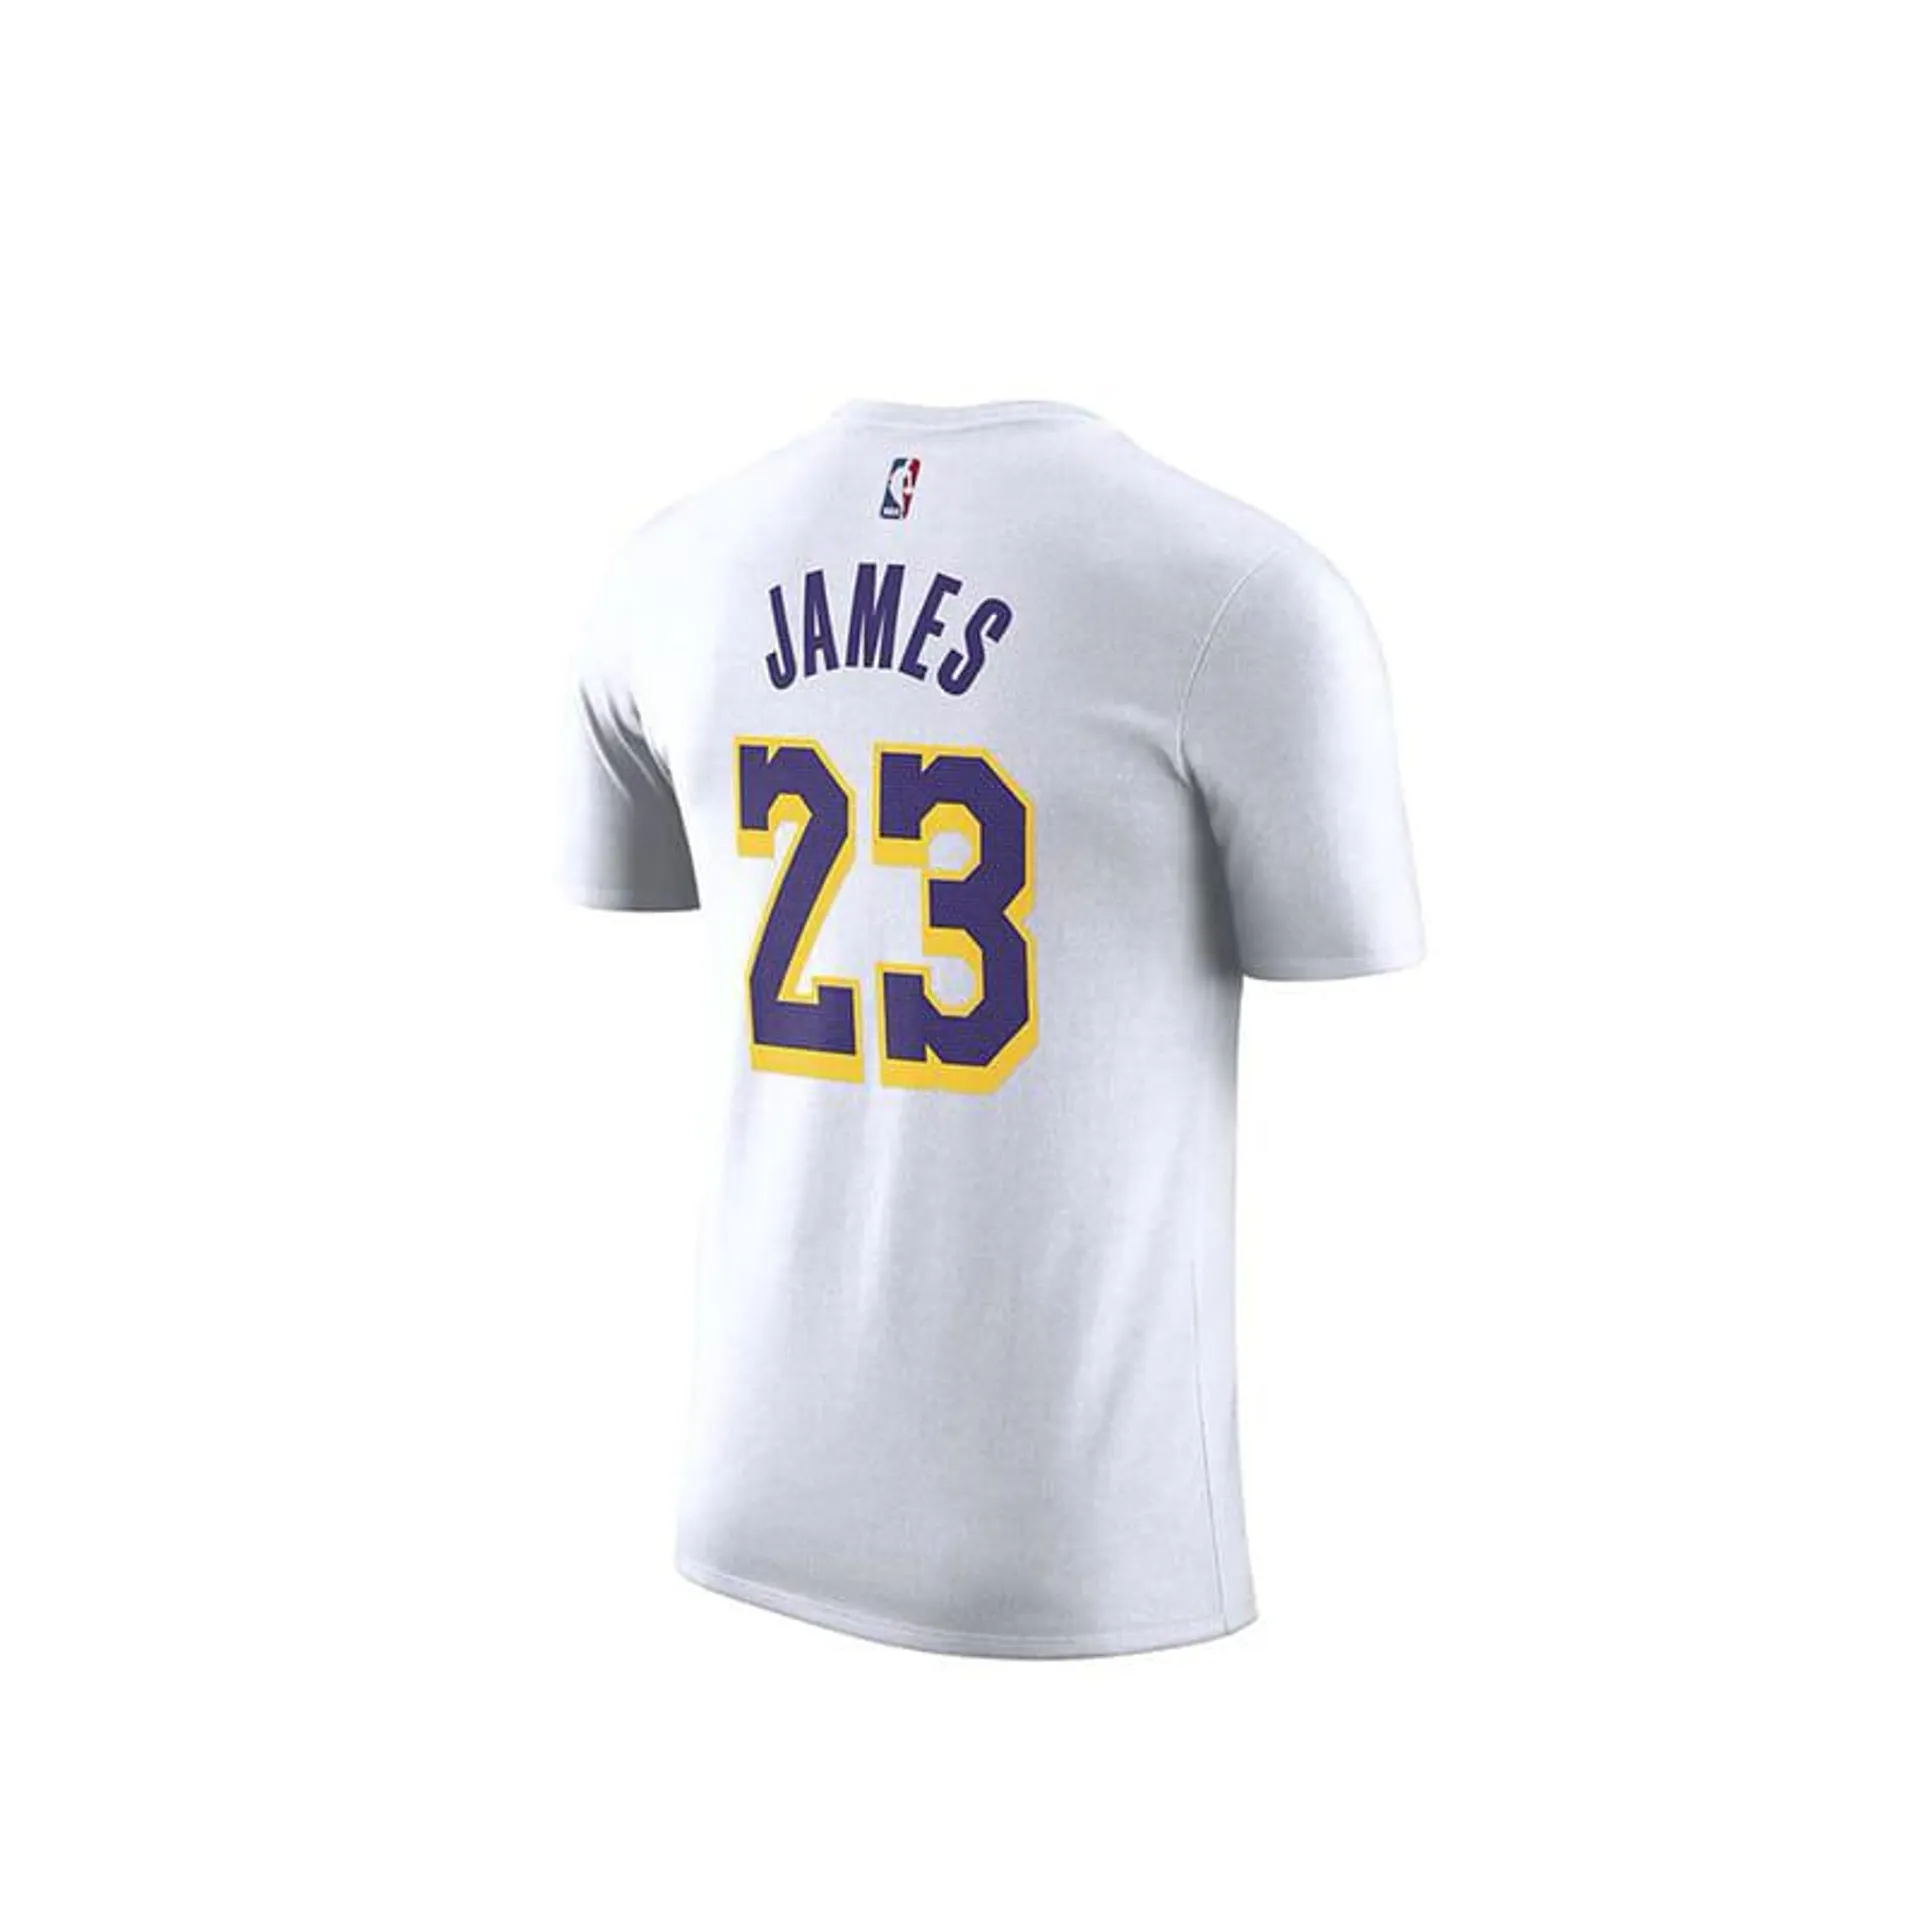 Camiseta Nike Baloncesto Hombre NBA Angeles Lakers Blanco